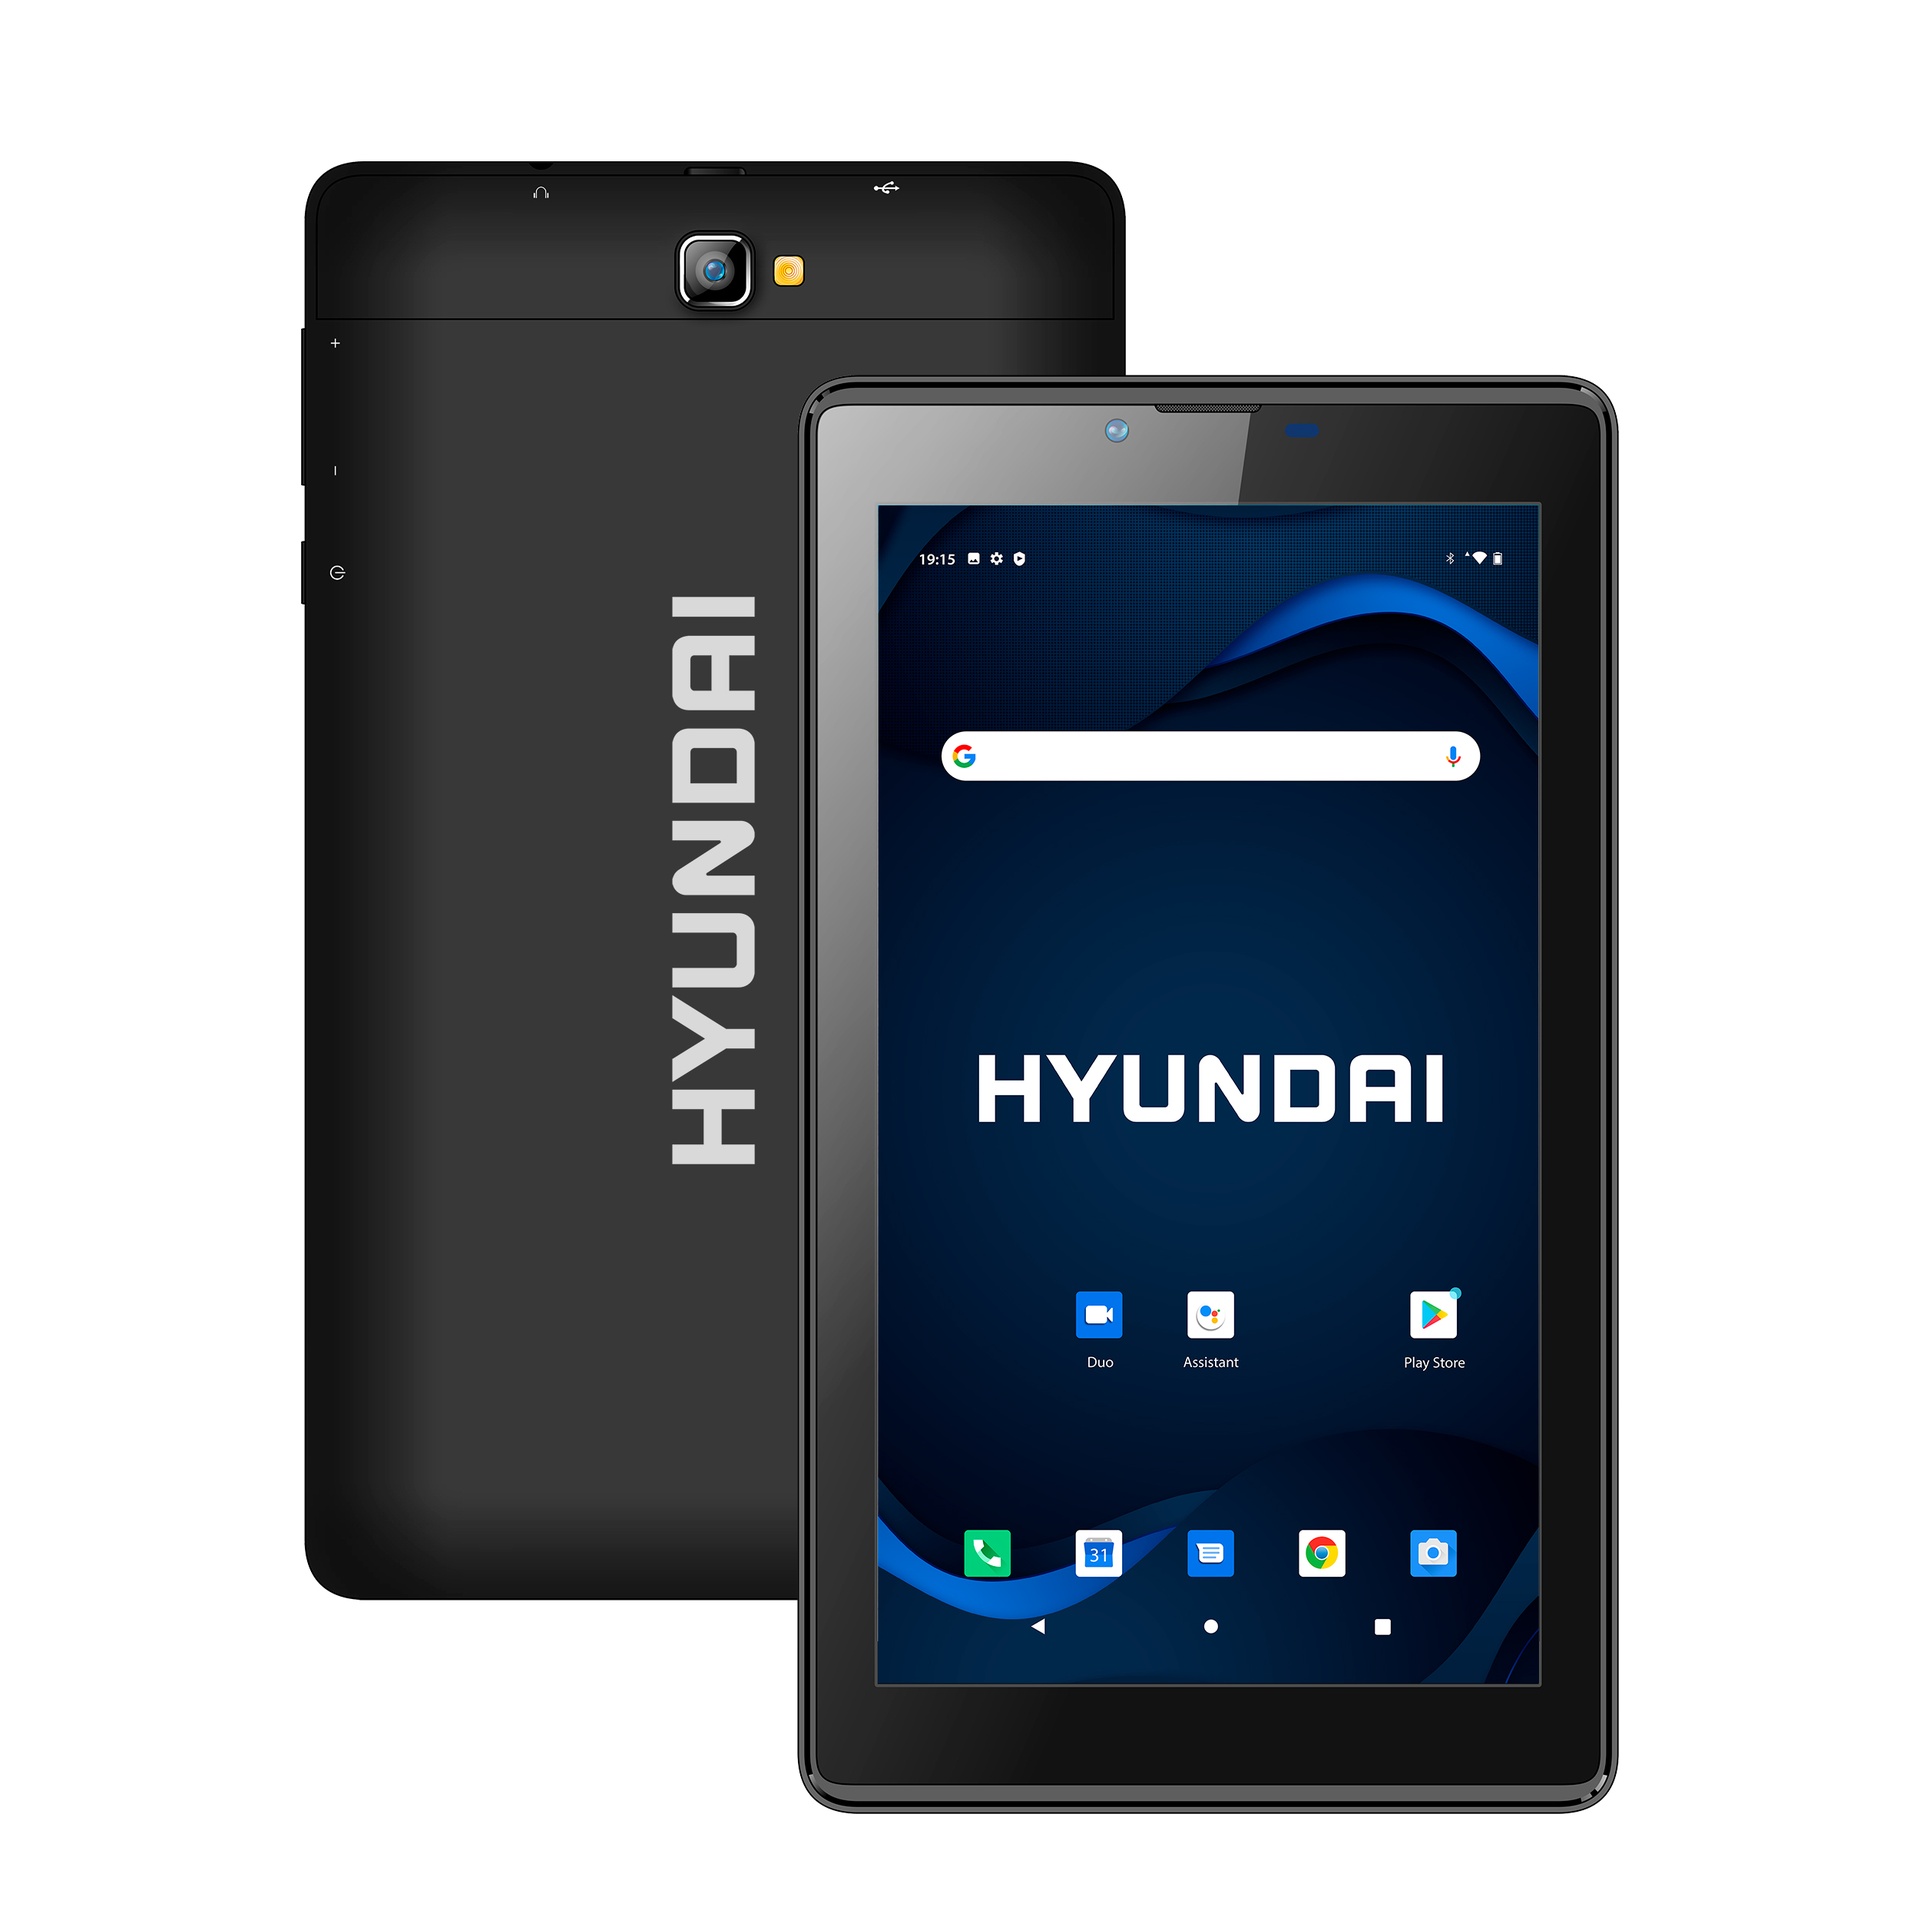 Hyundai HyTab 7GB1, 7" Tablet, 1024x600 IPS, Android 10 Go edition, Quad-Core Processor, 1GB RAM, 16GB Storage, 2MP/2MP, 3G - Black HT7GB1MBK UPC 810033035043 - HT7GB1MBK